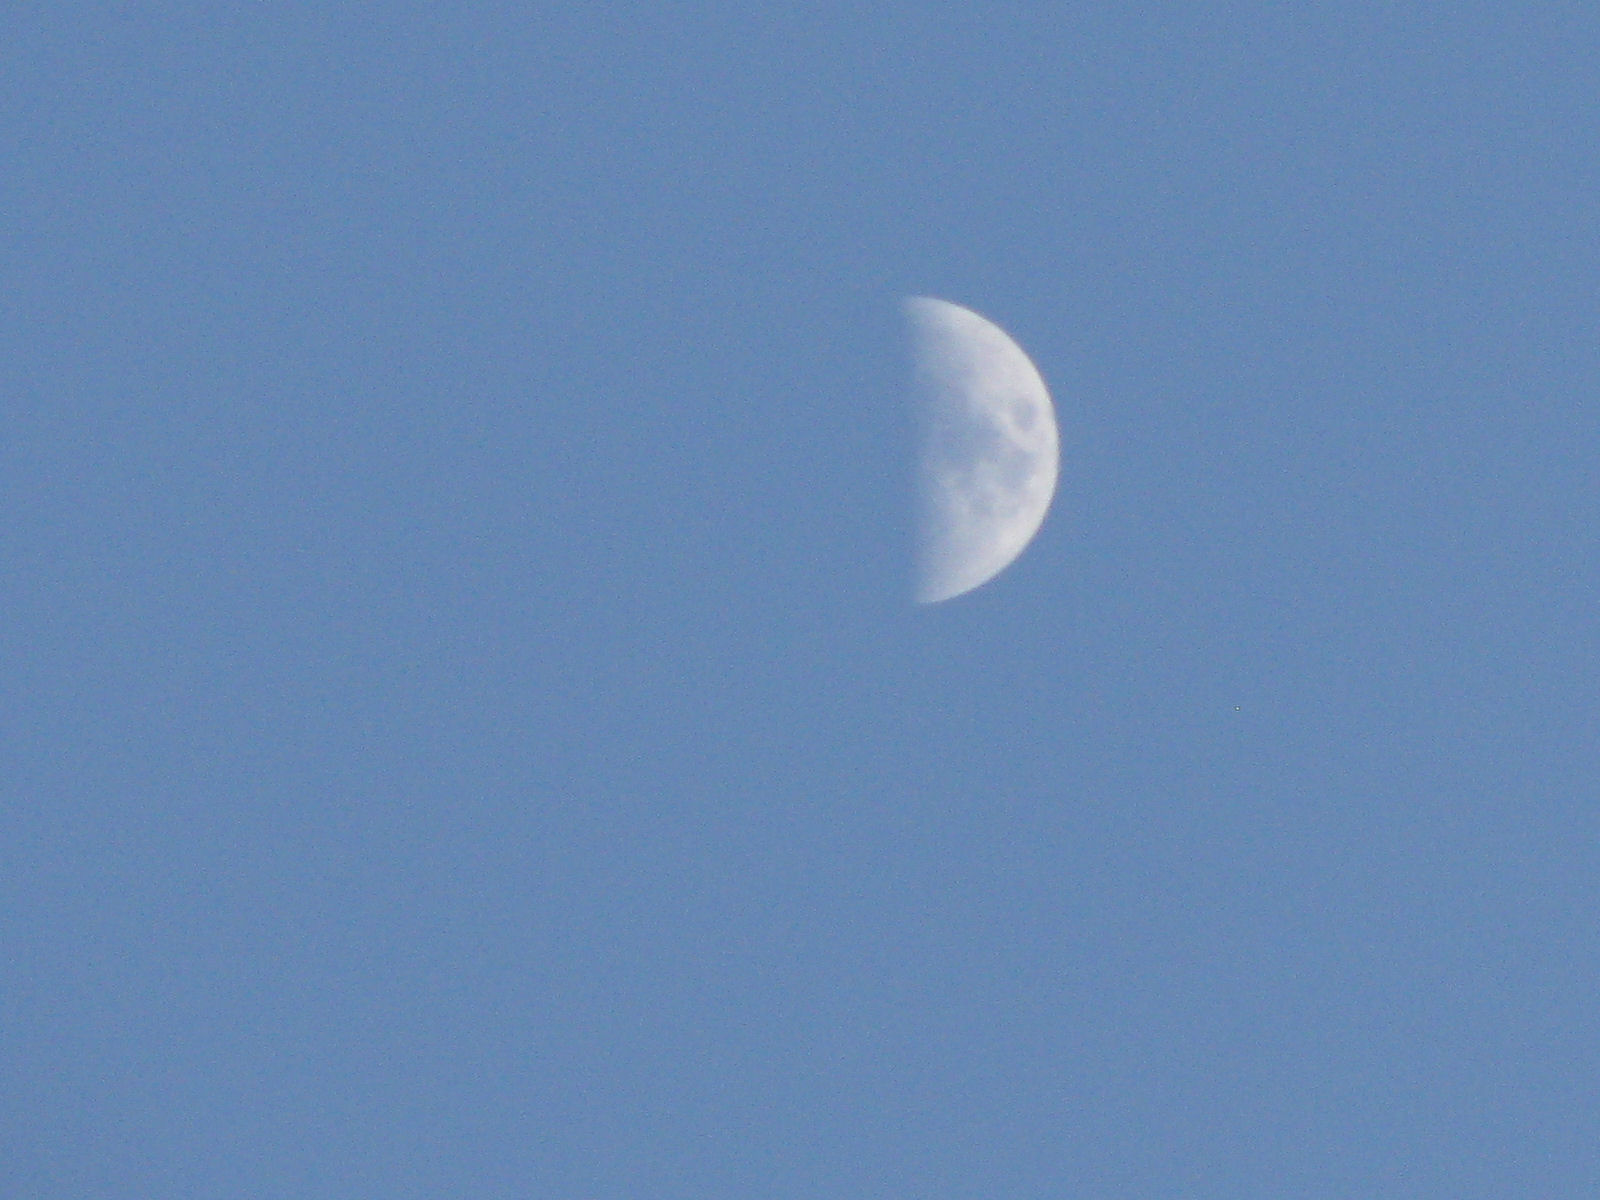 The moon photo